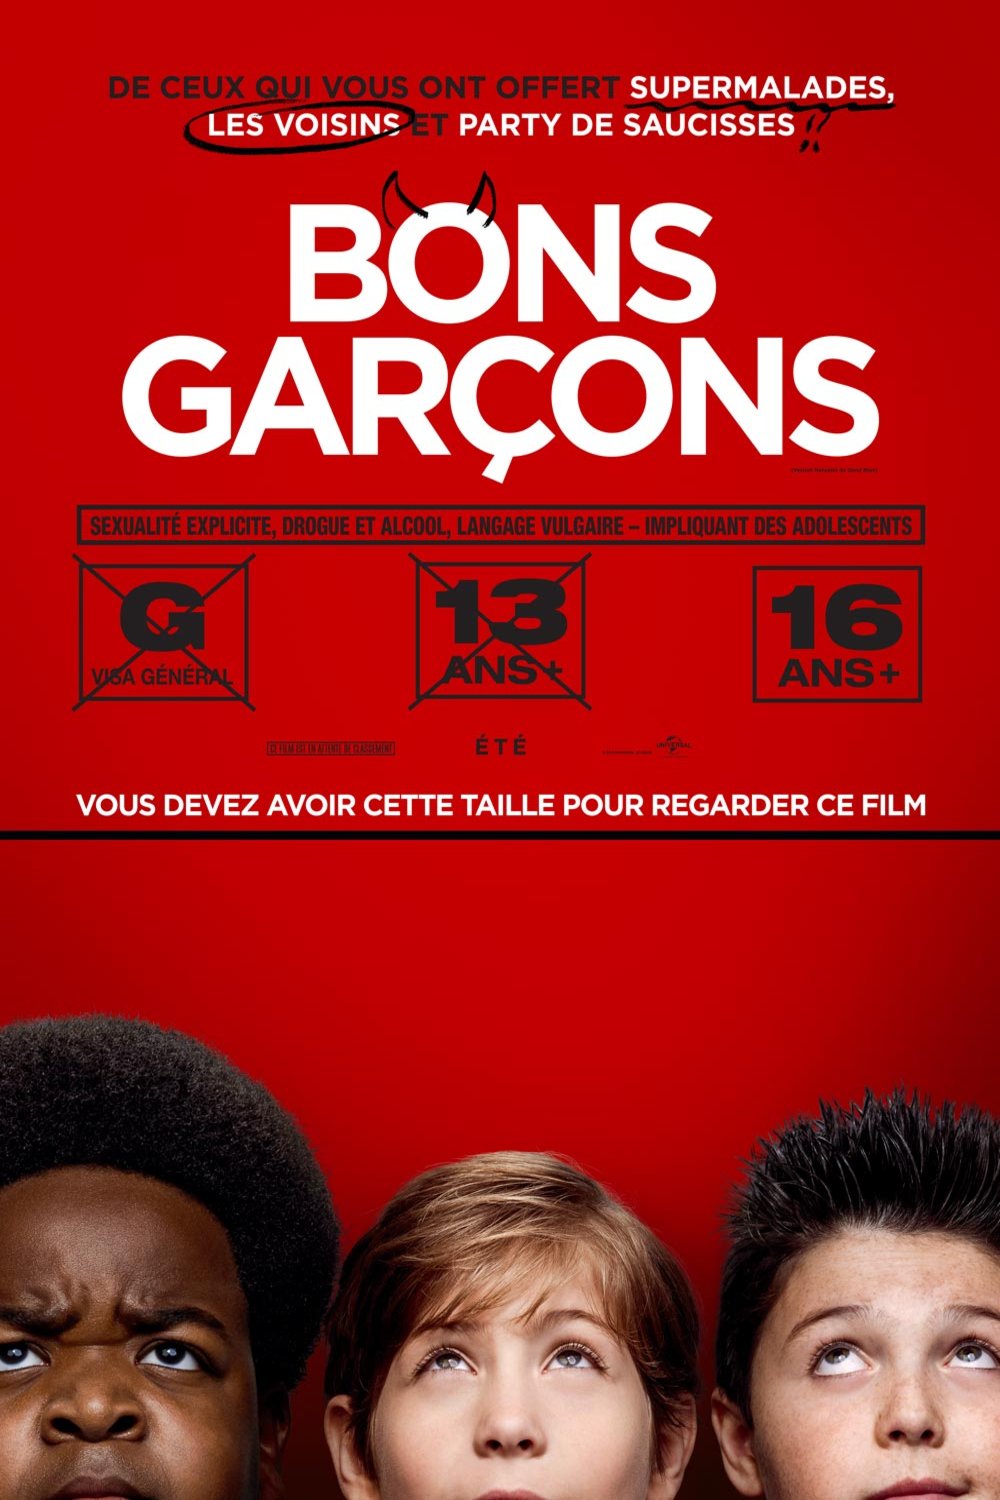 Poster of the movie Bons garçons